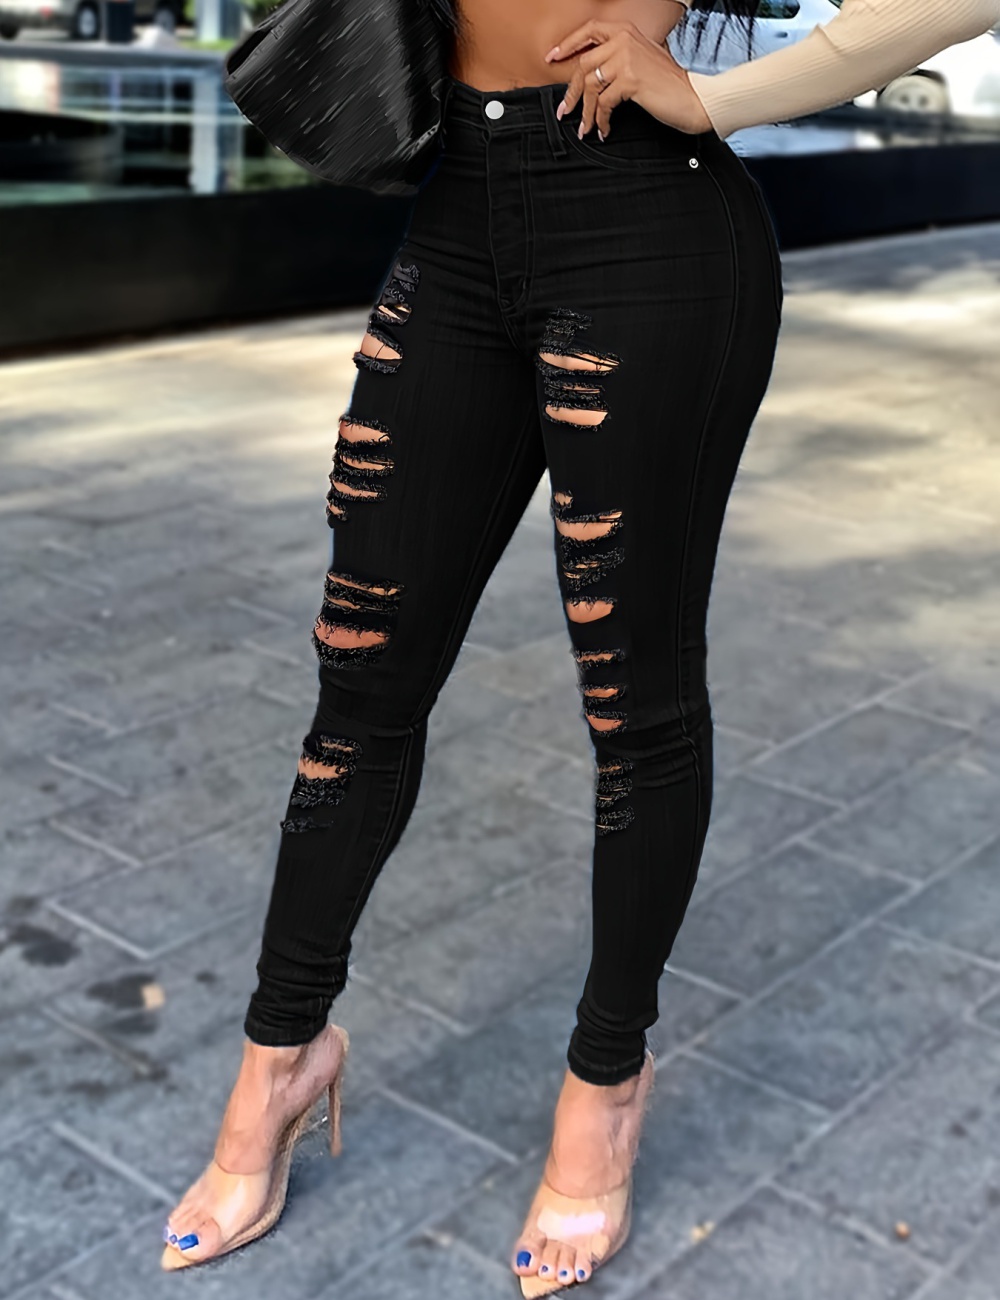 Denim European style pants black holes jeans for women